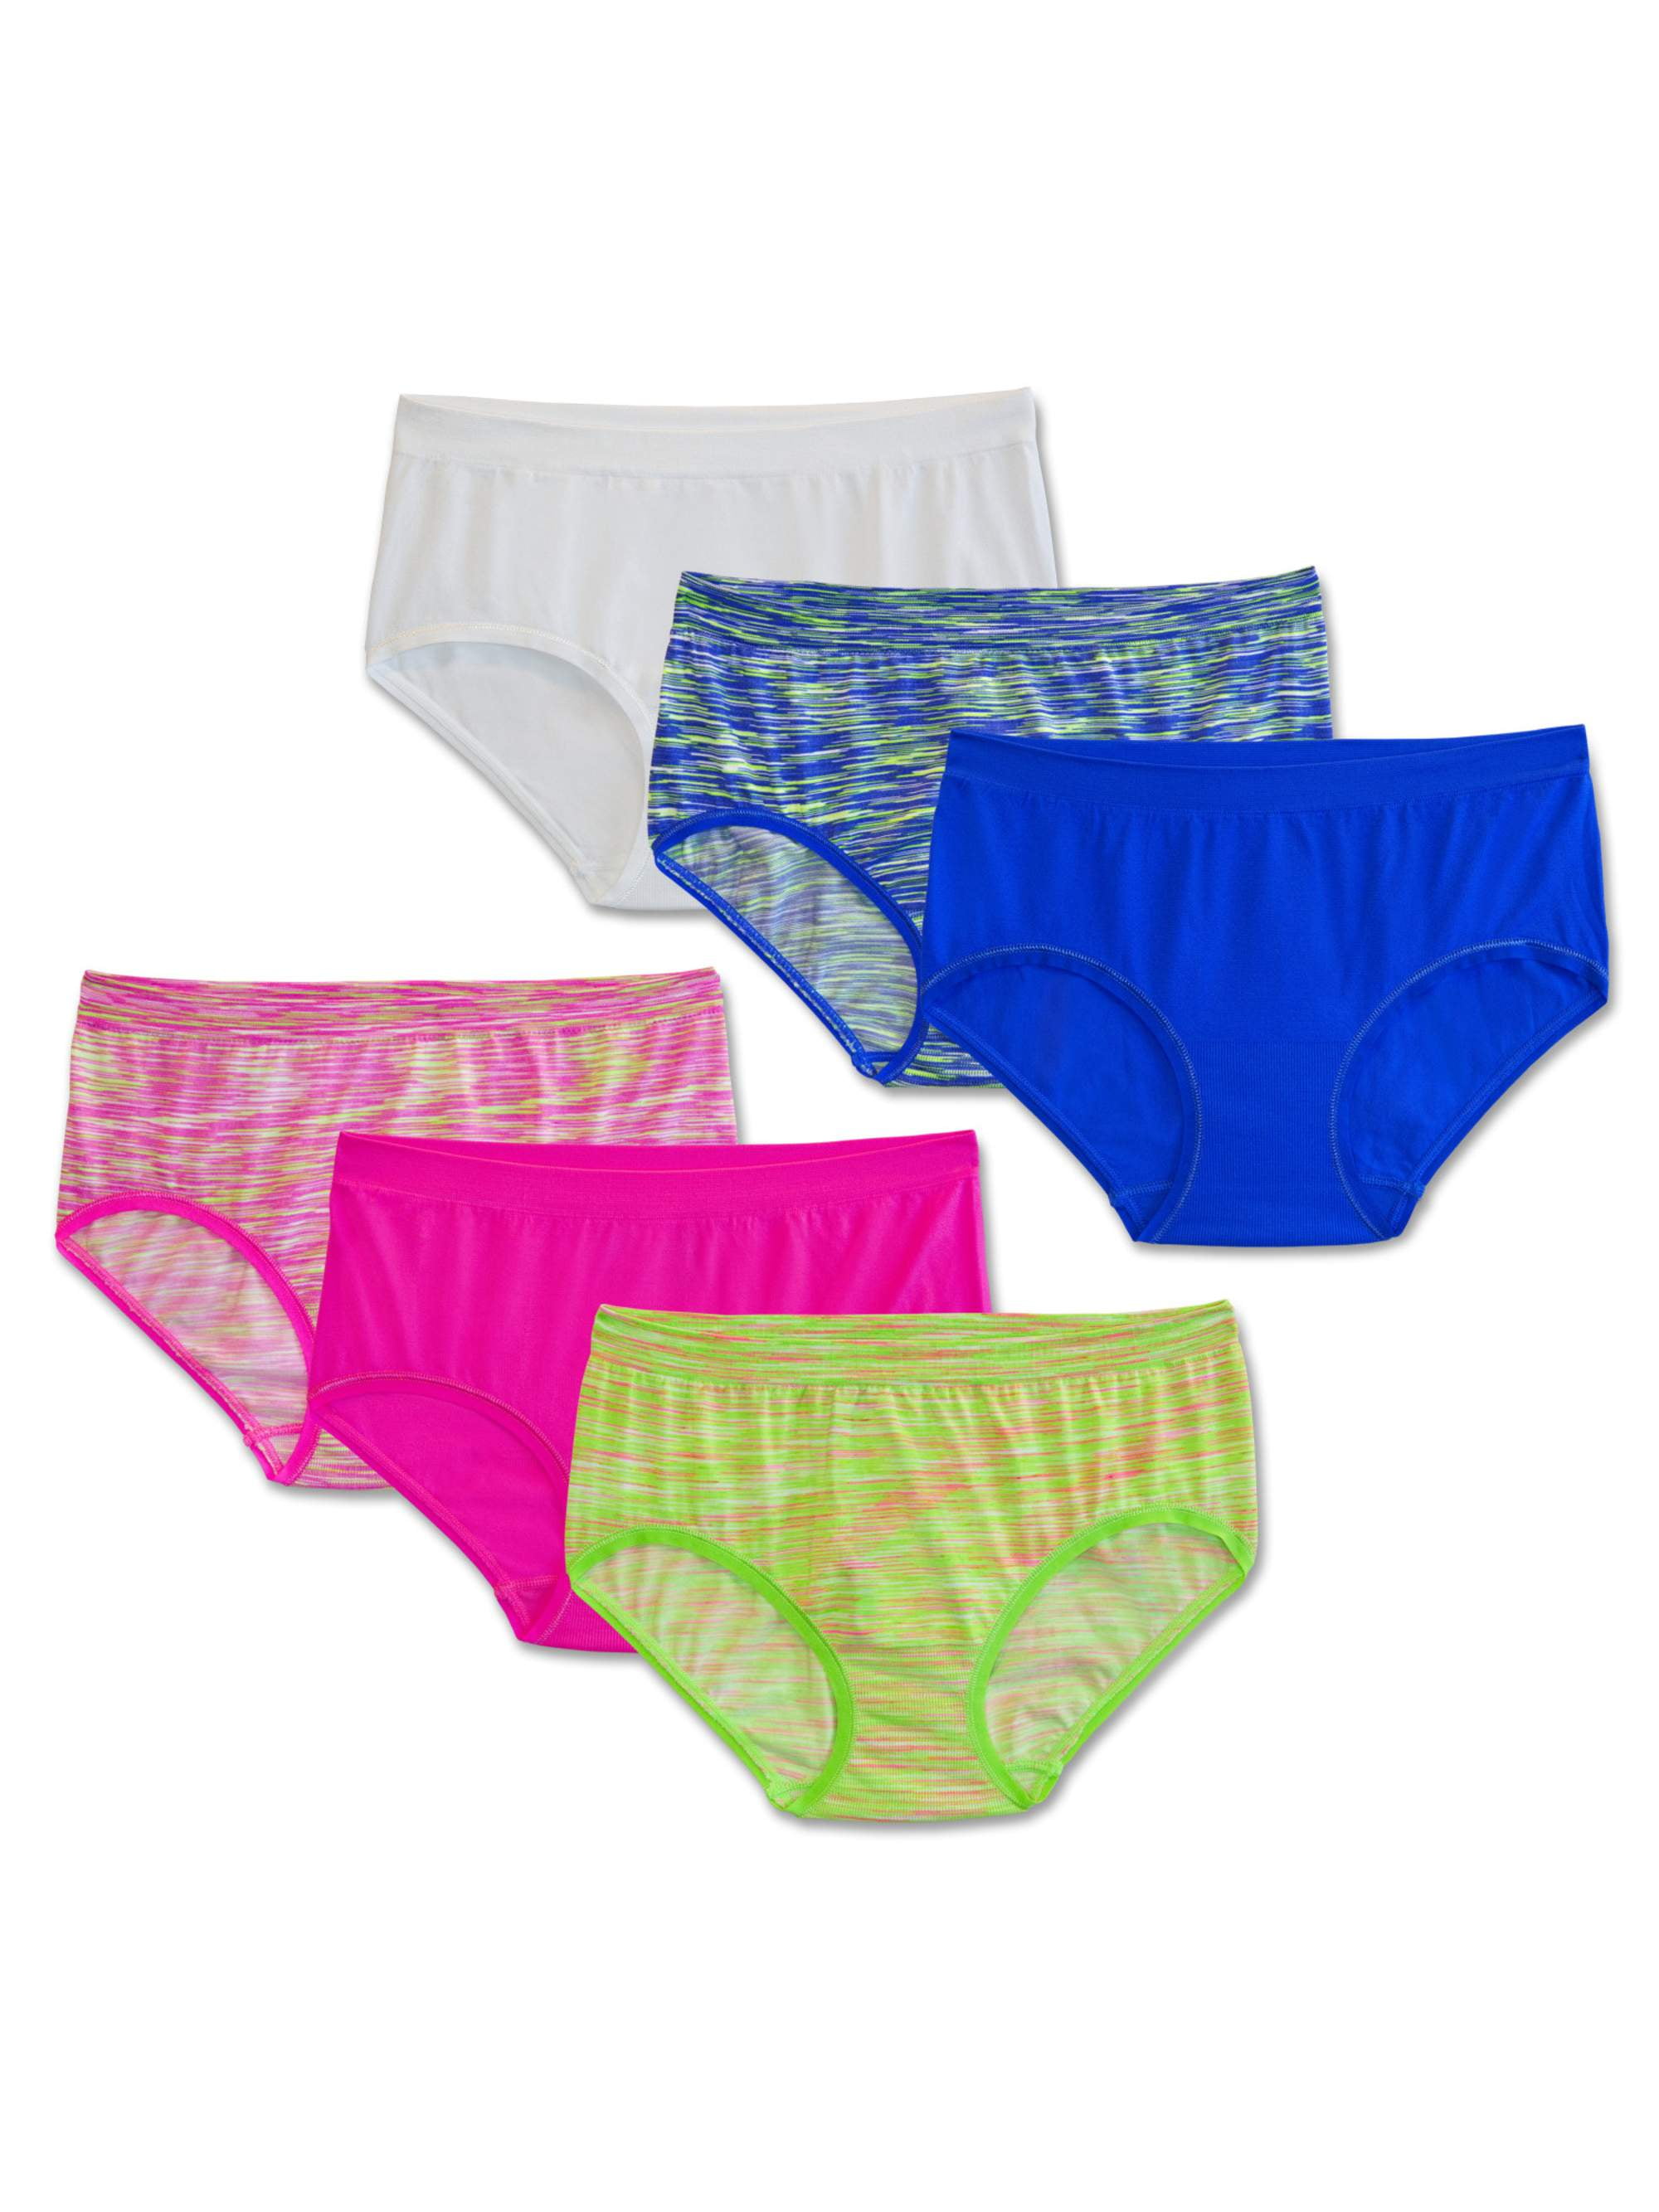 Fruit of the Loom Girls Seamless Brief Underwear, 6 Pack - Walmart